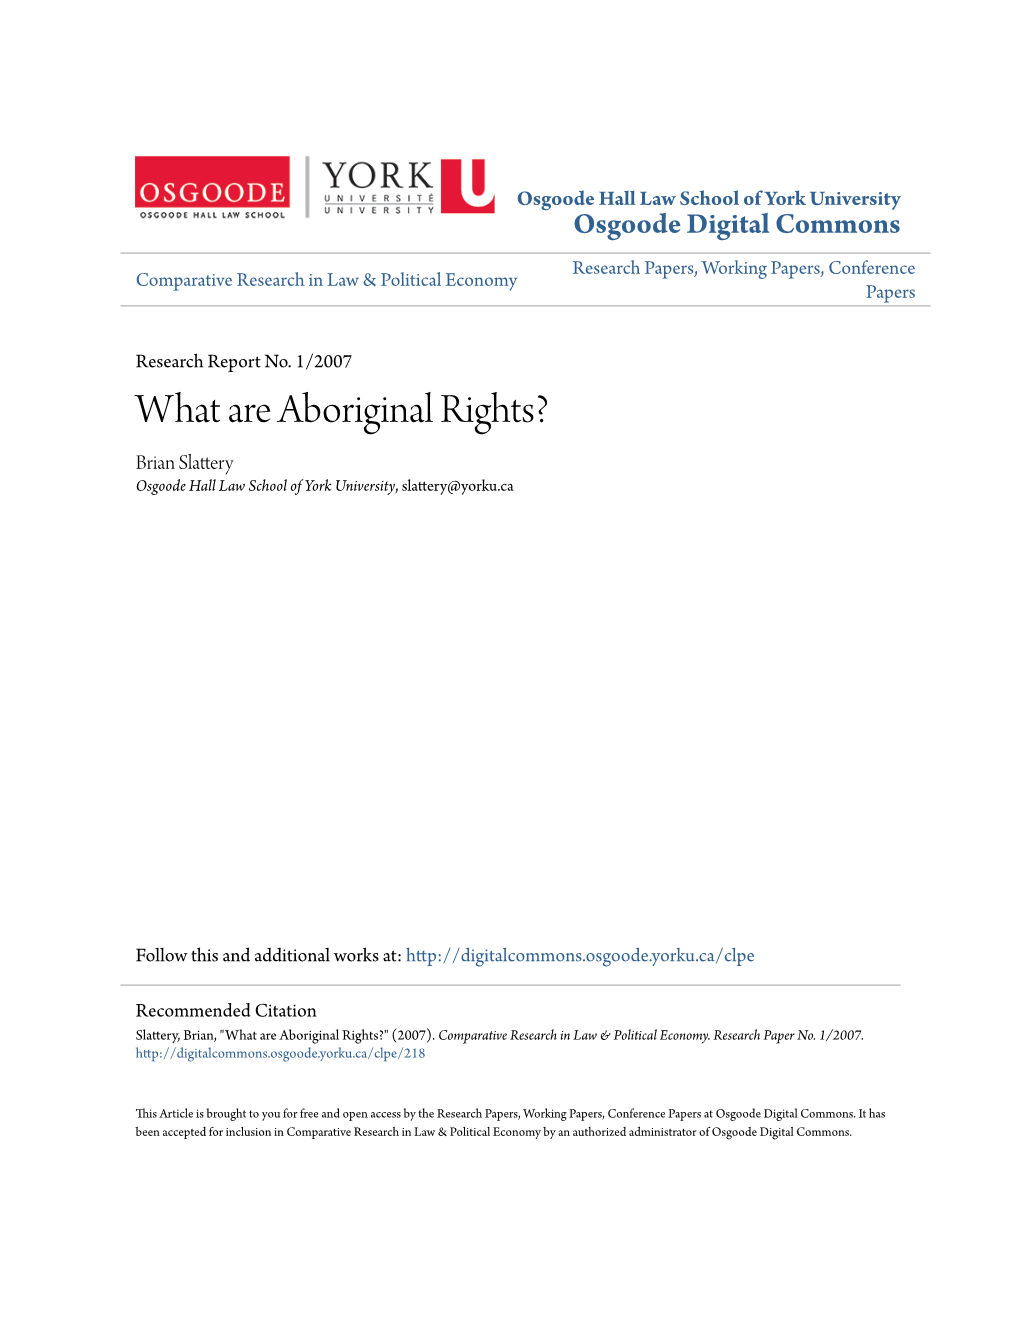 What Are Aboriginal Rights? Brian Slattery Osgoode Hall Law School of York University, Slattery@Yorku.Ca